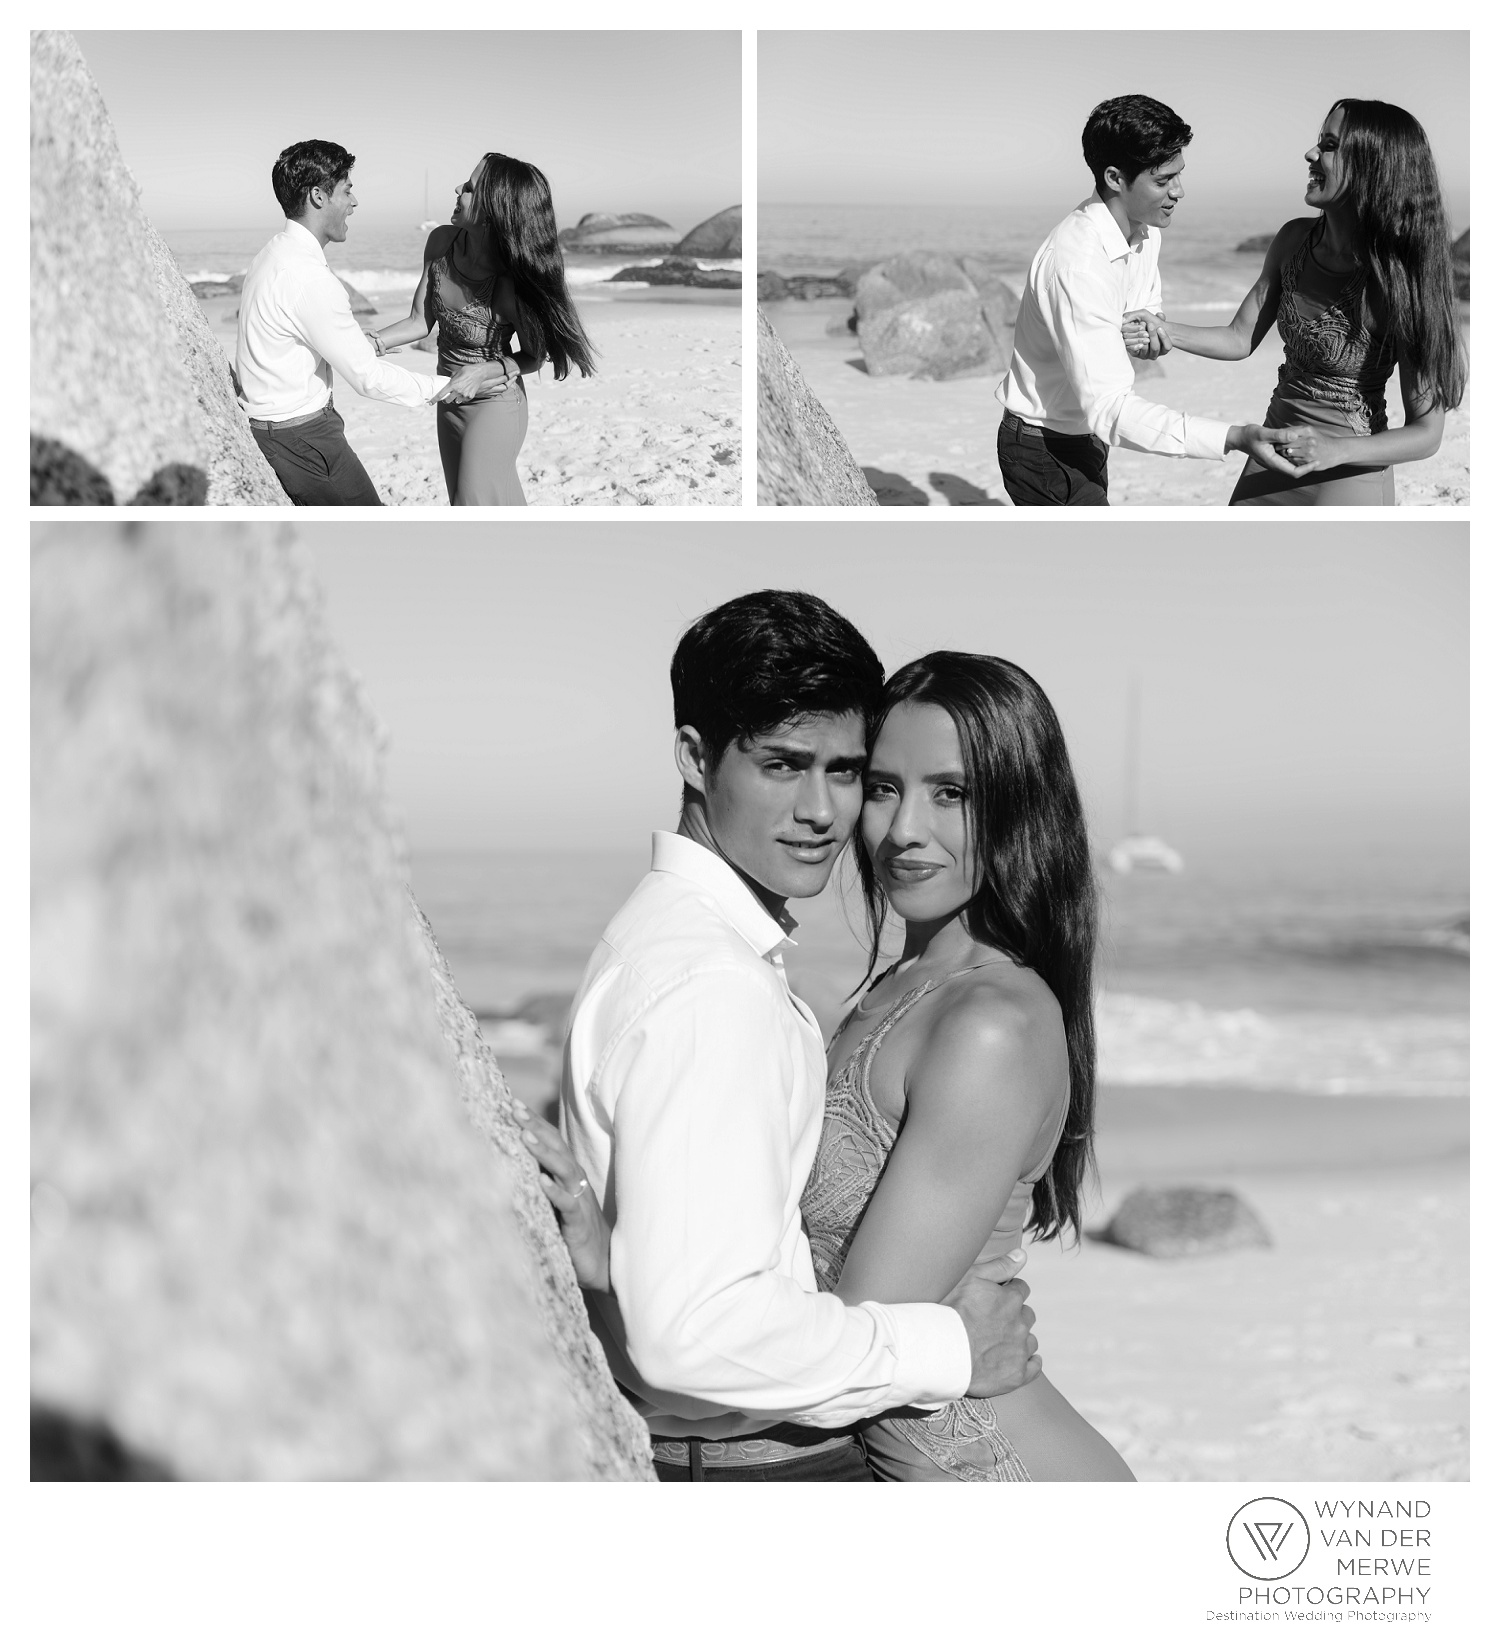 WvdM_engagementshoot_engaged_couple_prewedding_llandudno_cliftonbeach_beach_formal_southafrica_weddingphotographer_greernicolas-105.jpg